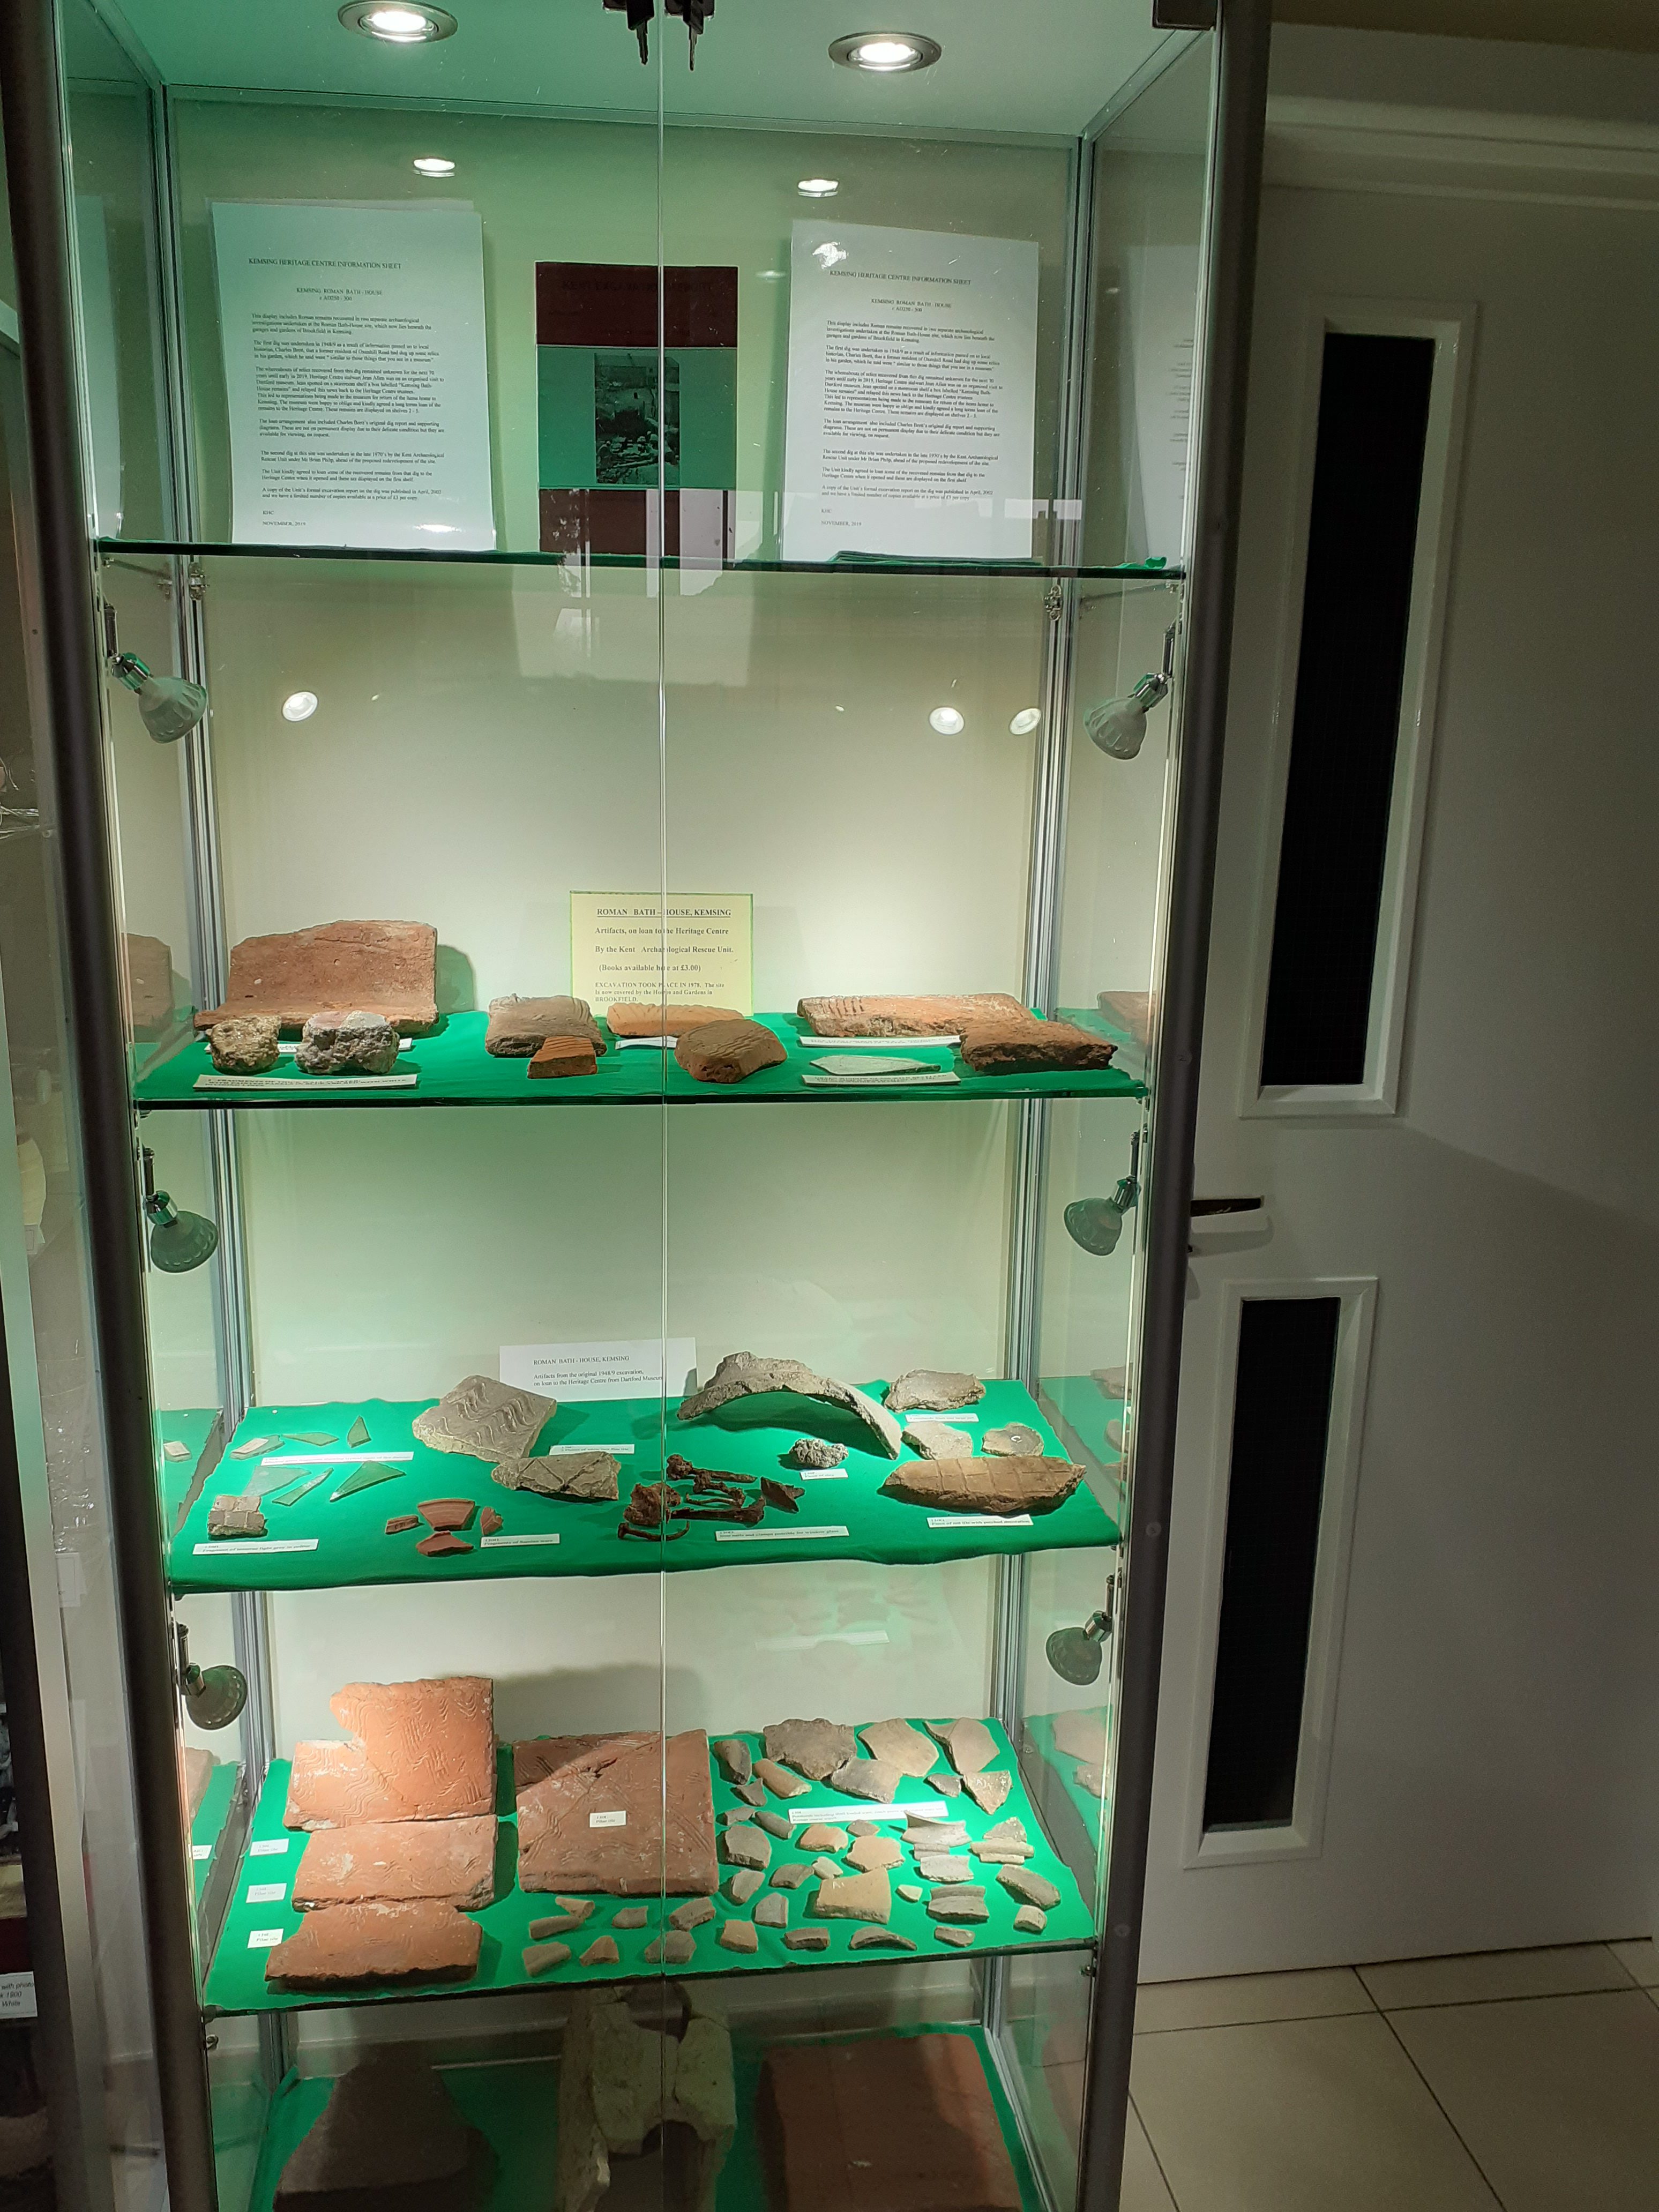 Roman Bath House Artifacts Display Case